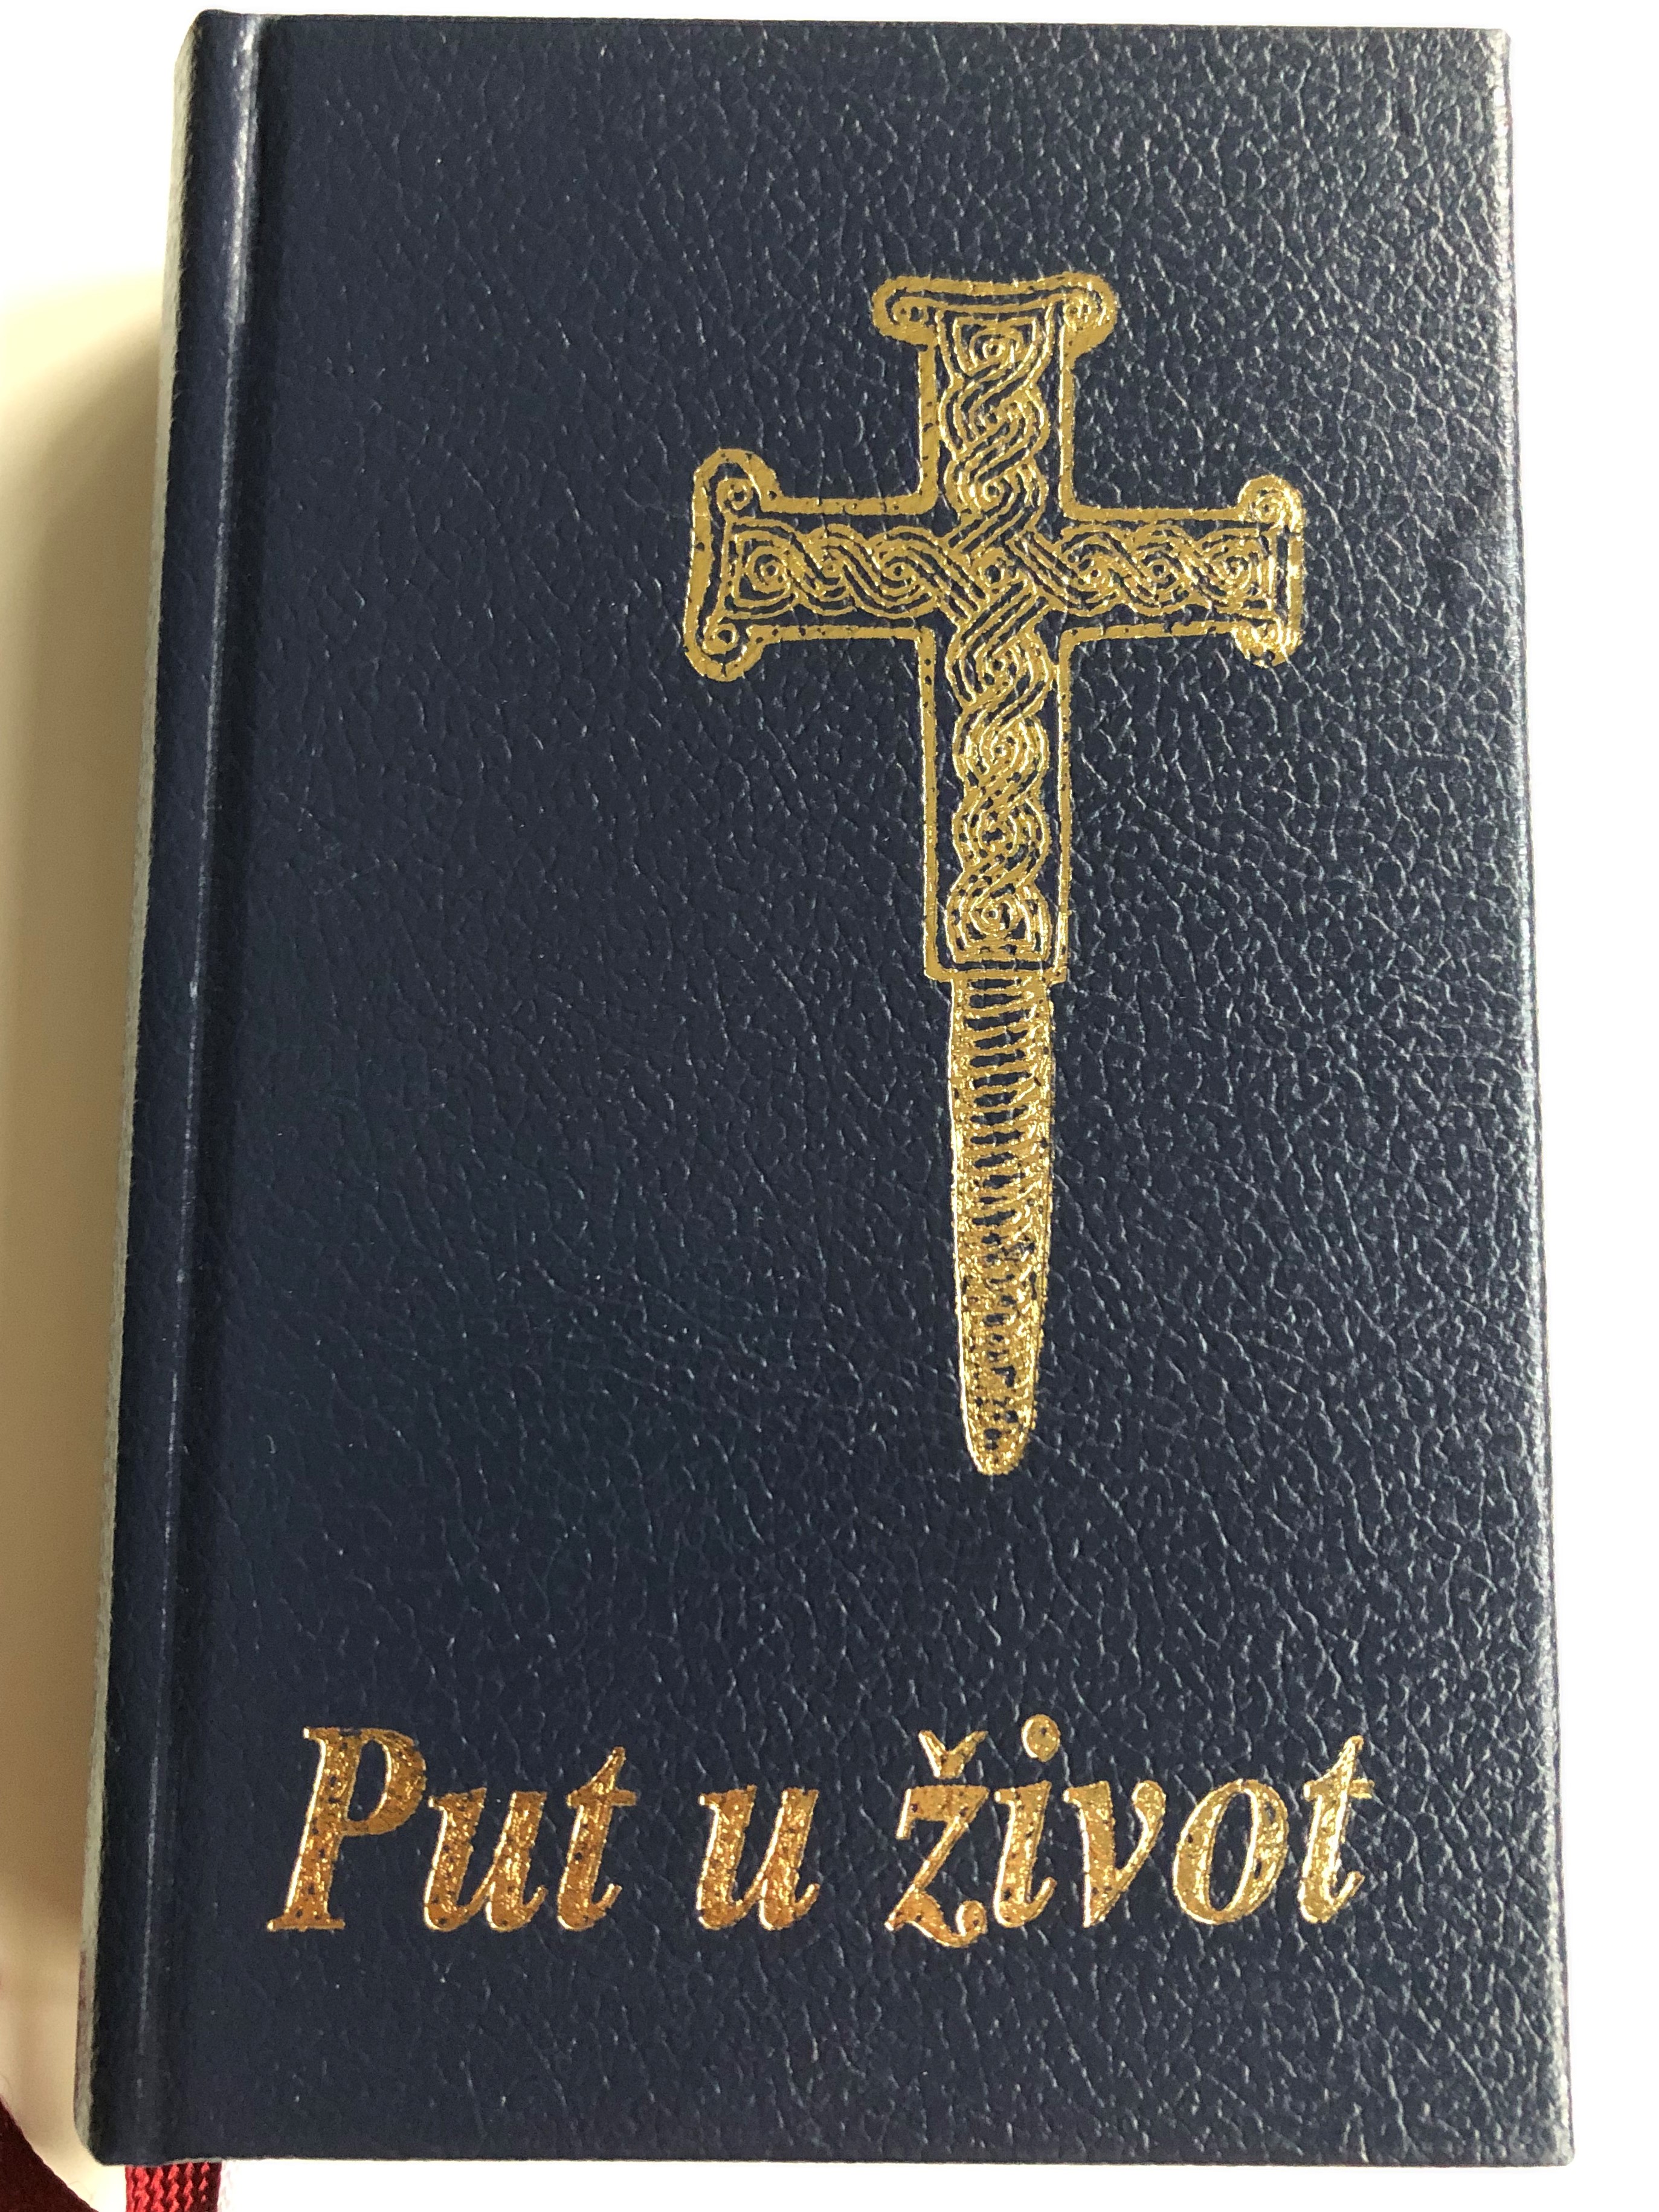 put-u-ivot-way-of-life-prayer-and-rites-9th-amended-edition-hardcover-black-1.jpg